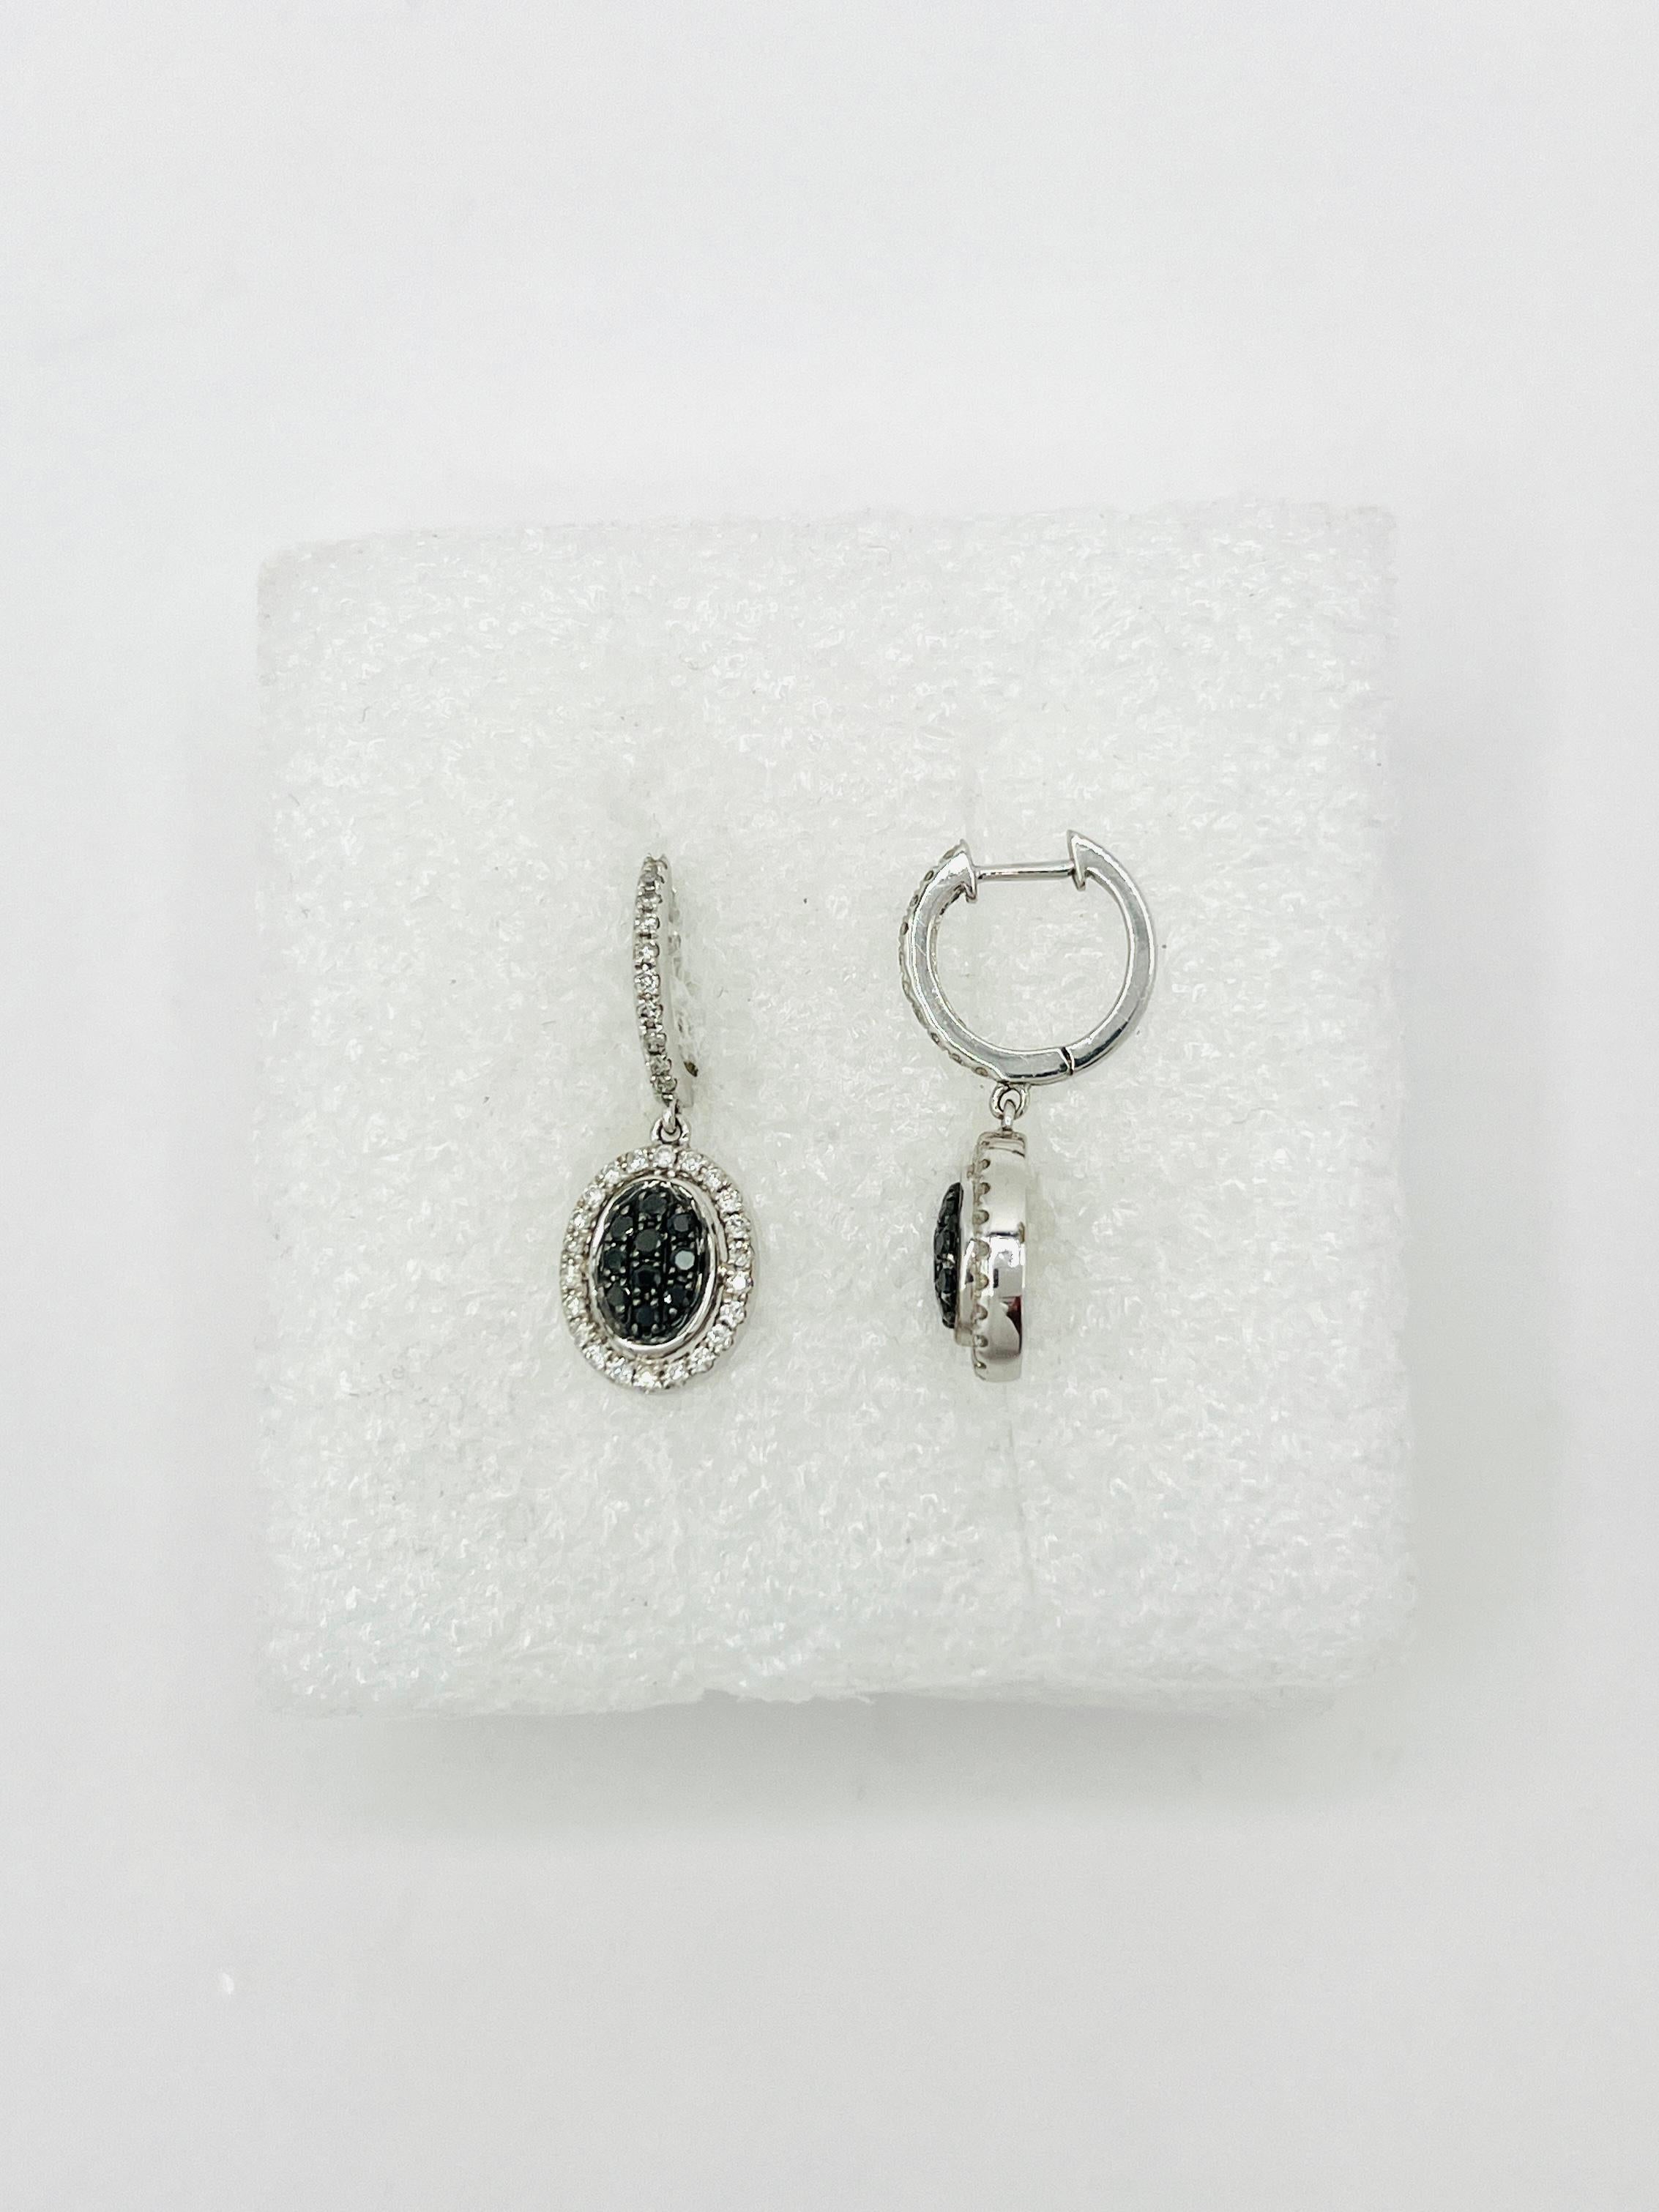 Black and White Diamond Dangle Earrings in 14K White Gold For Sale 1